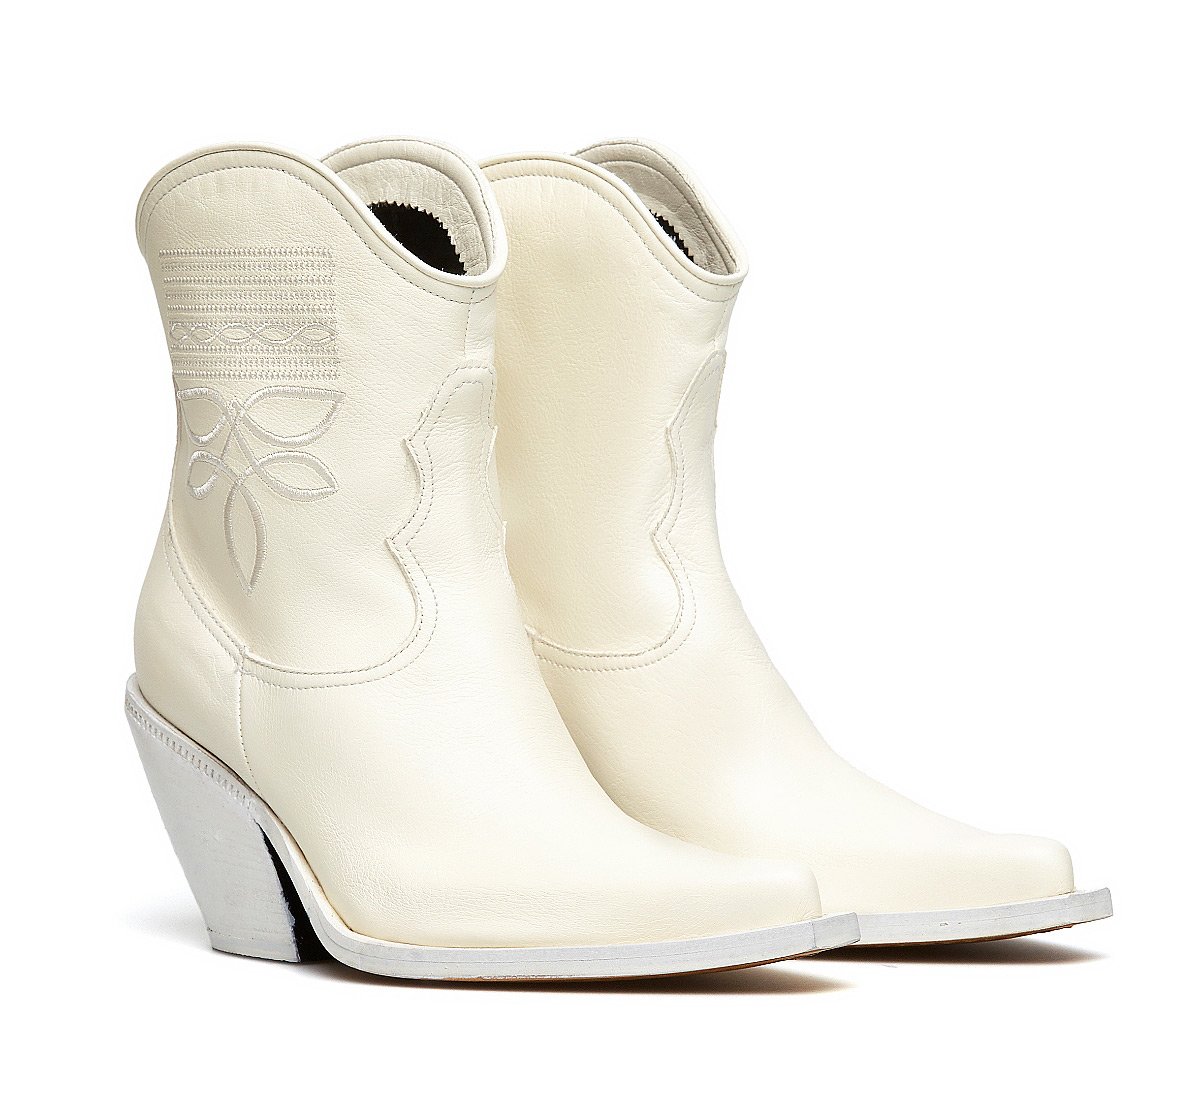 All-white Barracuda cowboy boots